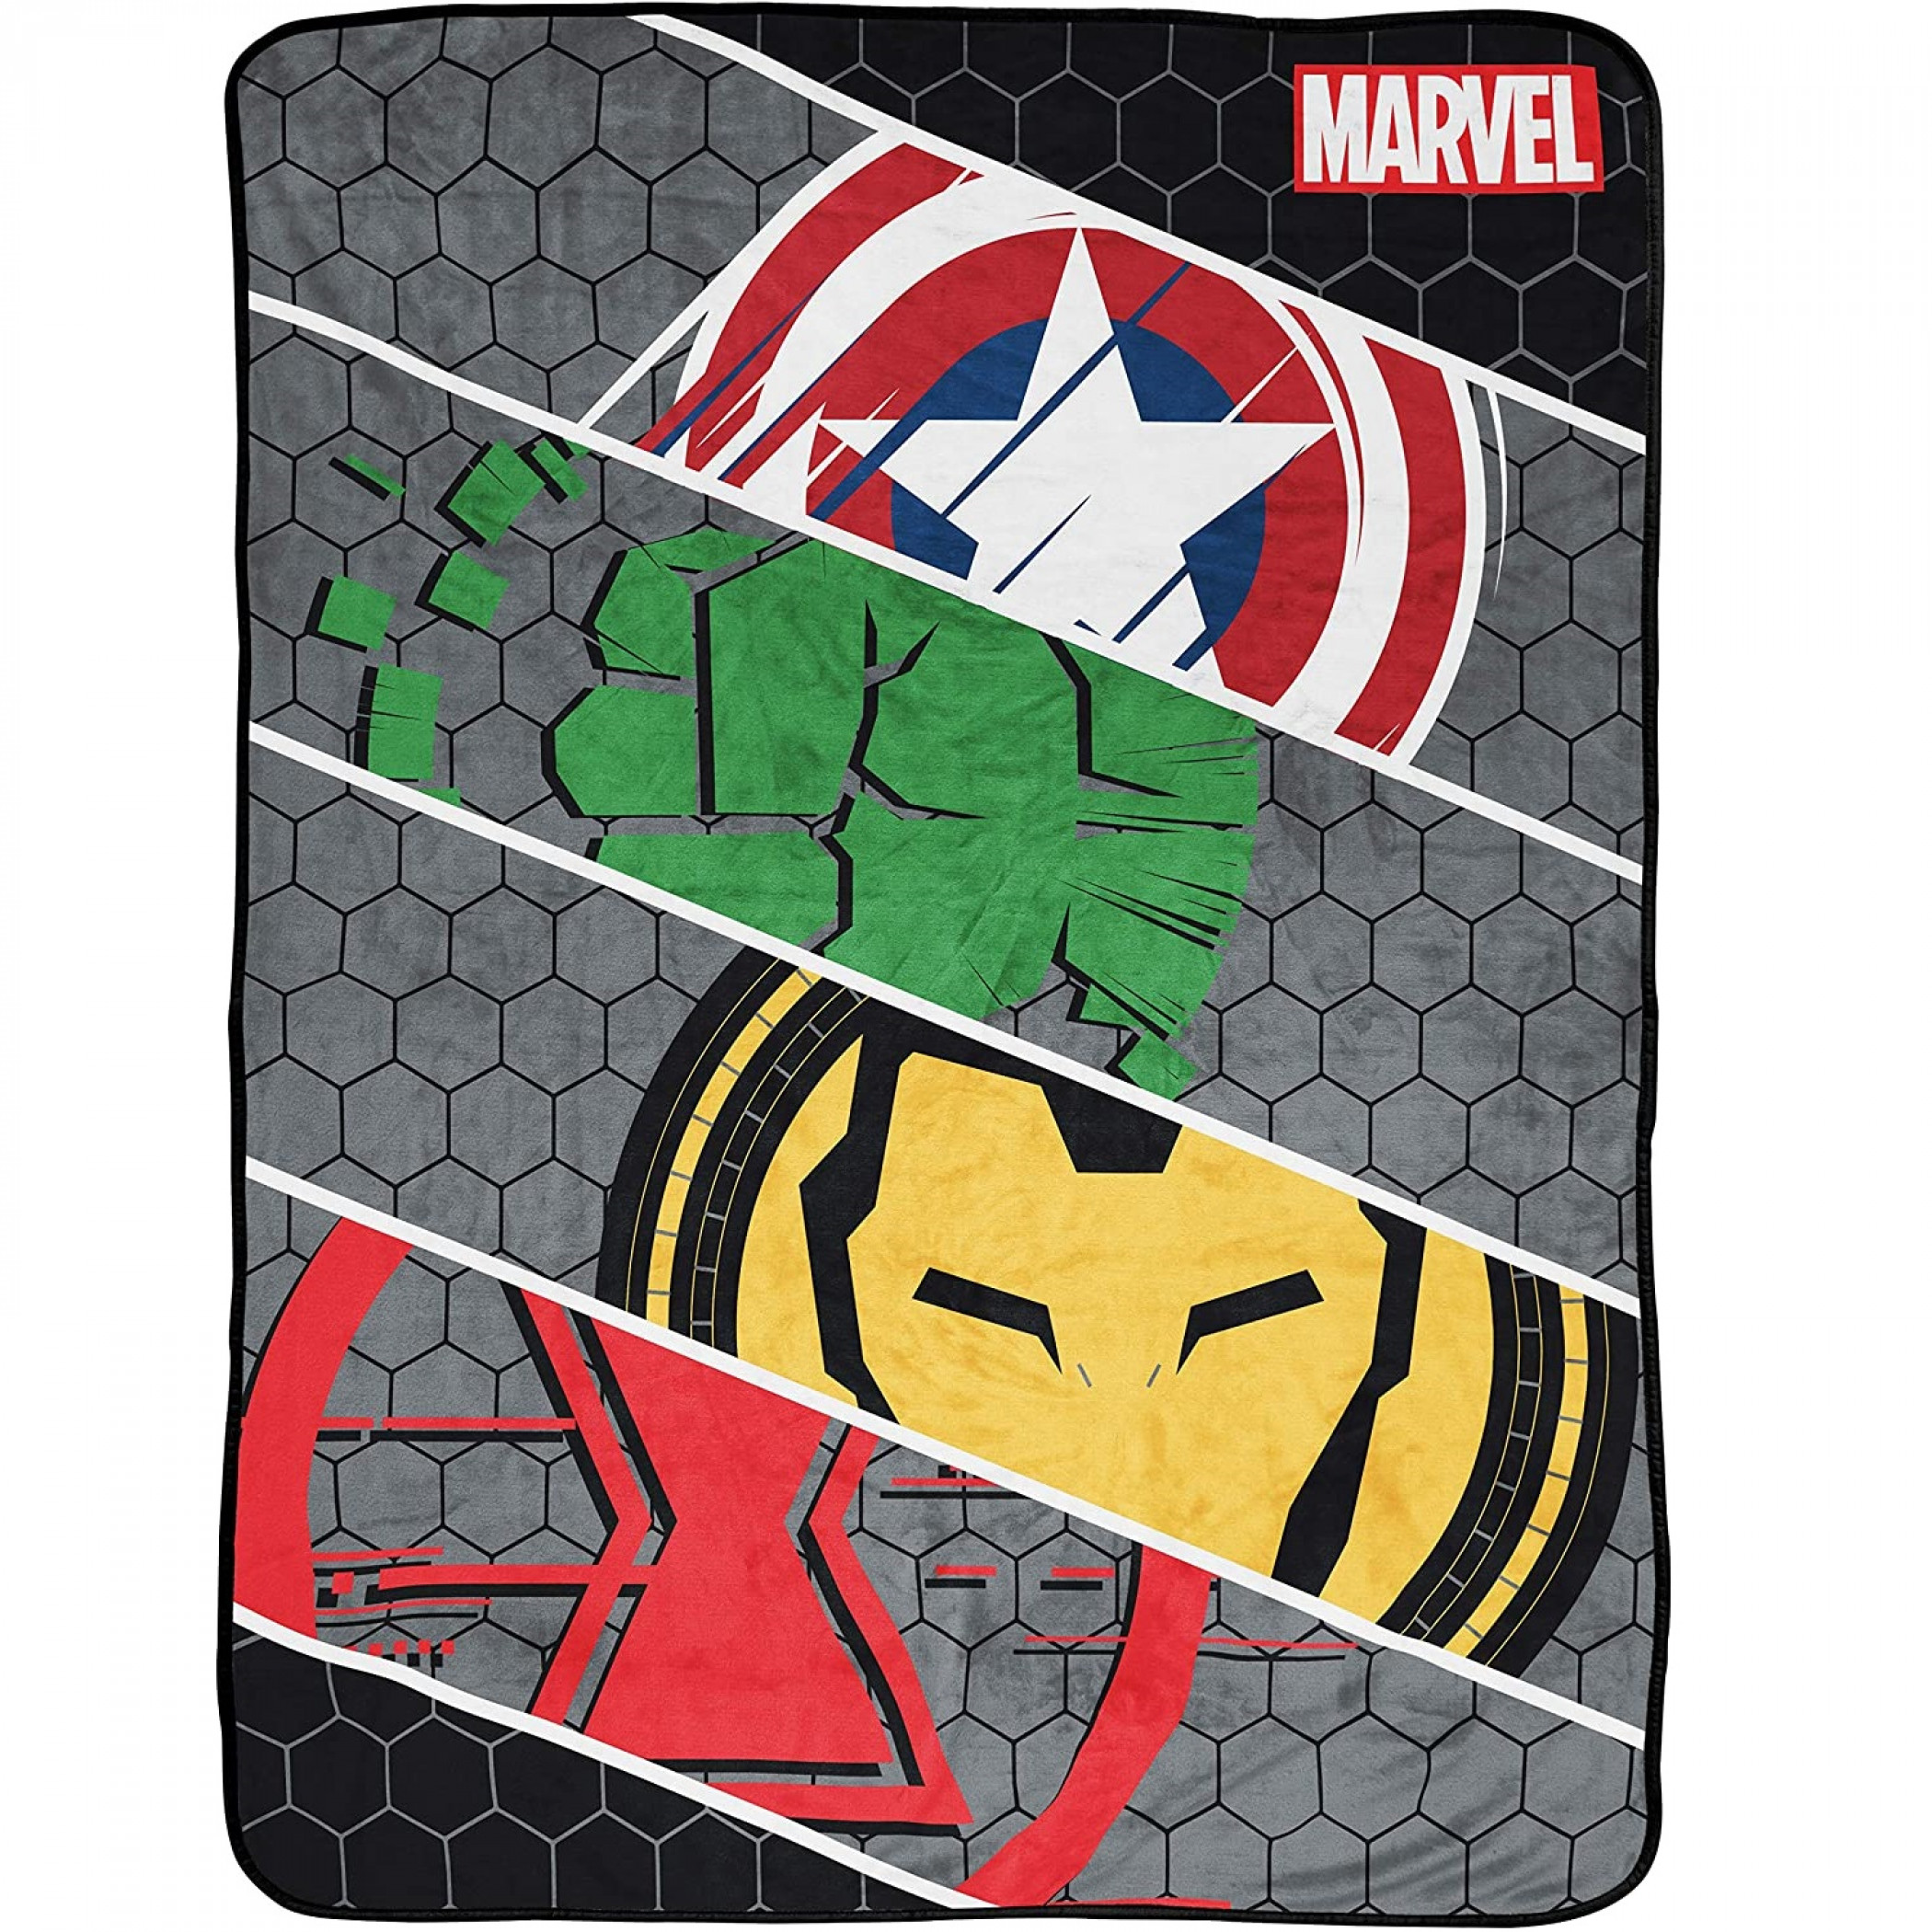 Marvel Avengers Symbols Grid 46 x 60 Throw Blanket